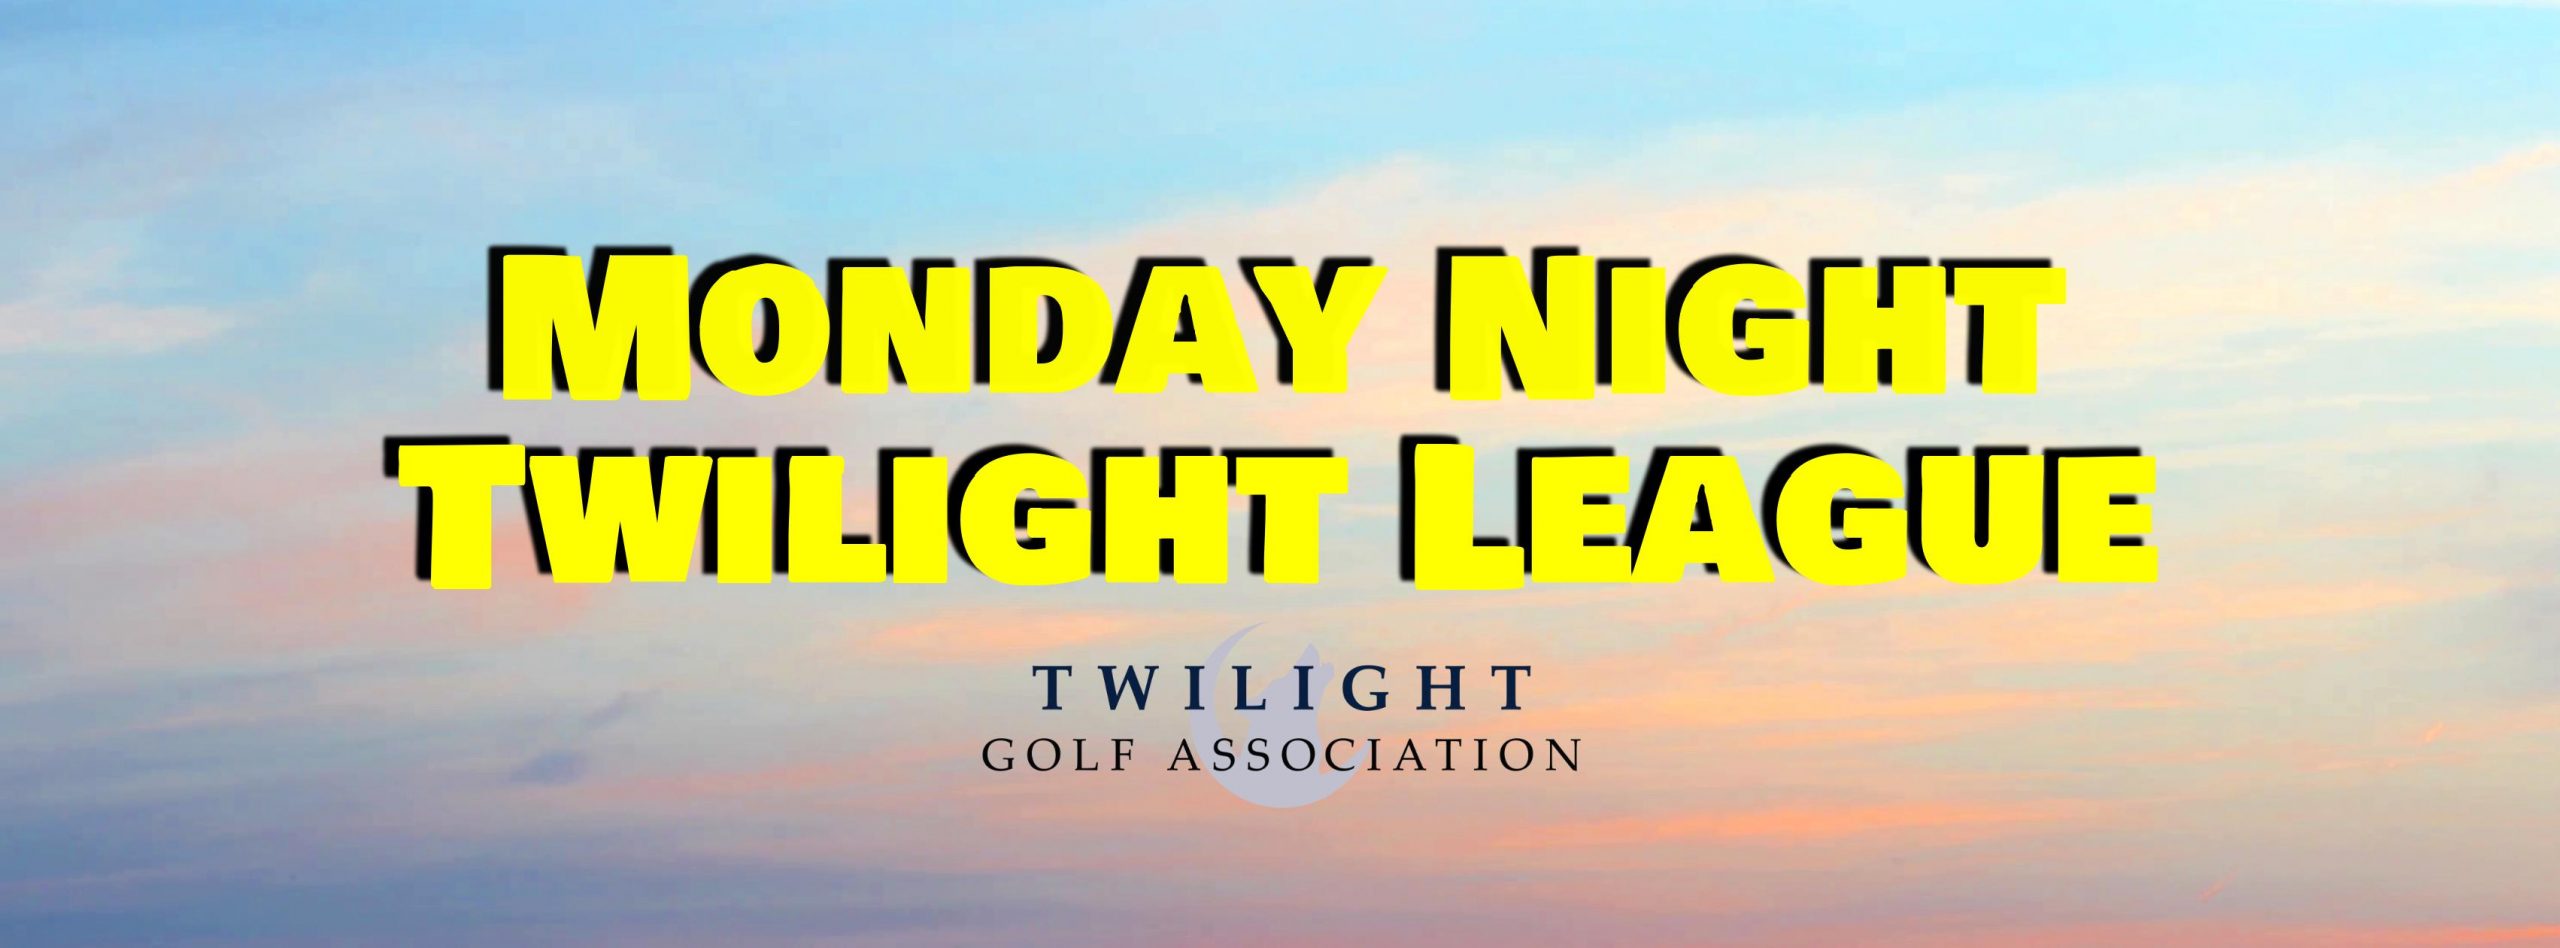 Monday Twilight League at Lady Bird Golf Course